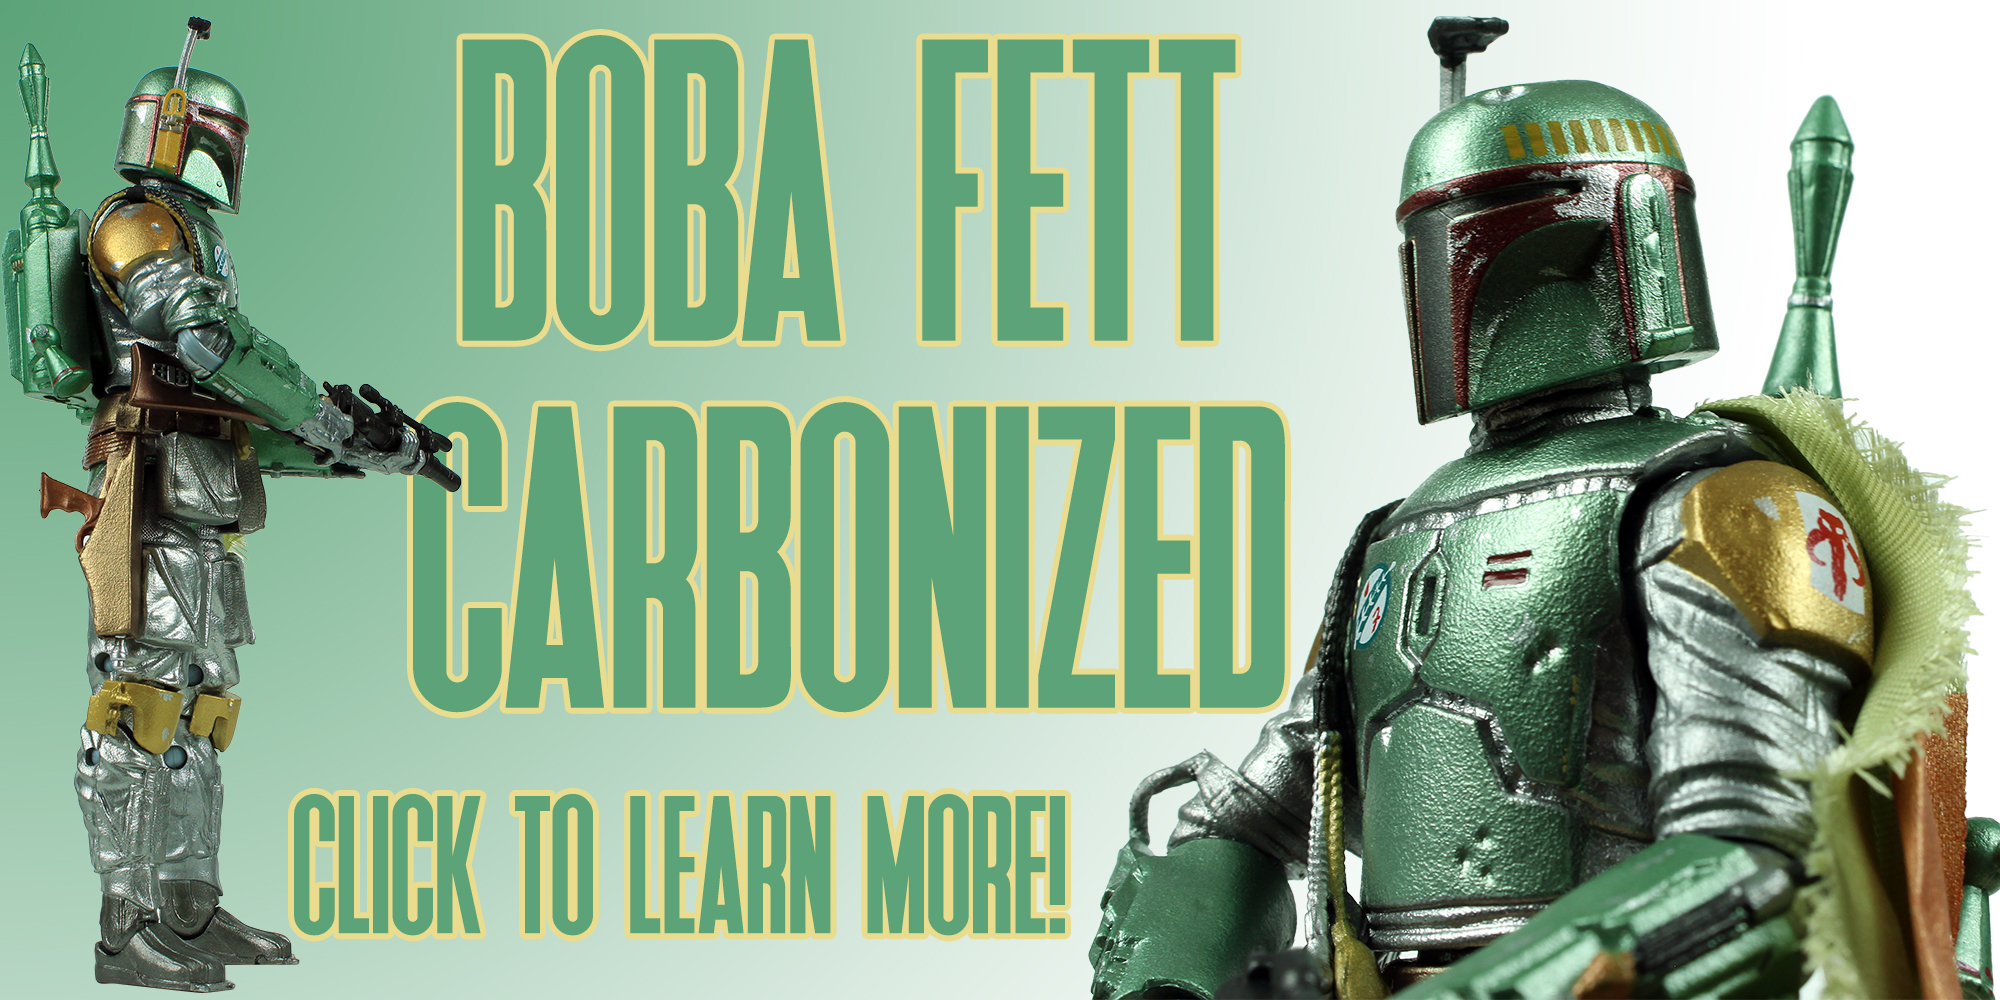 Carbonized Boba Fett